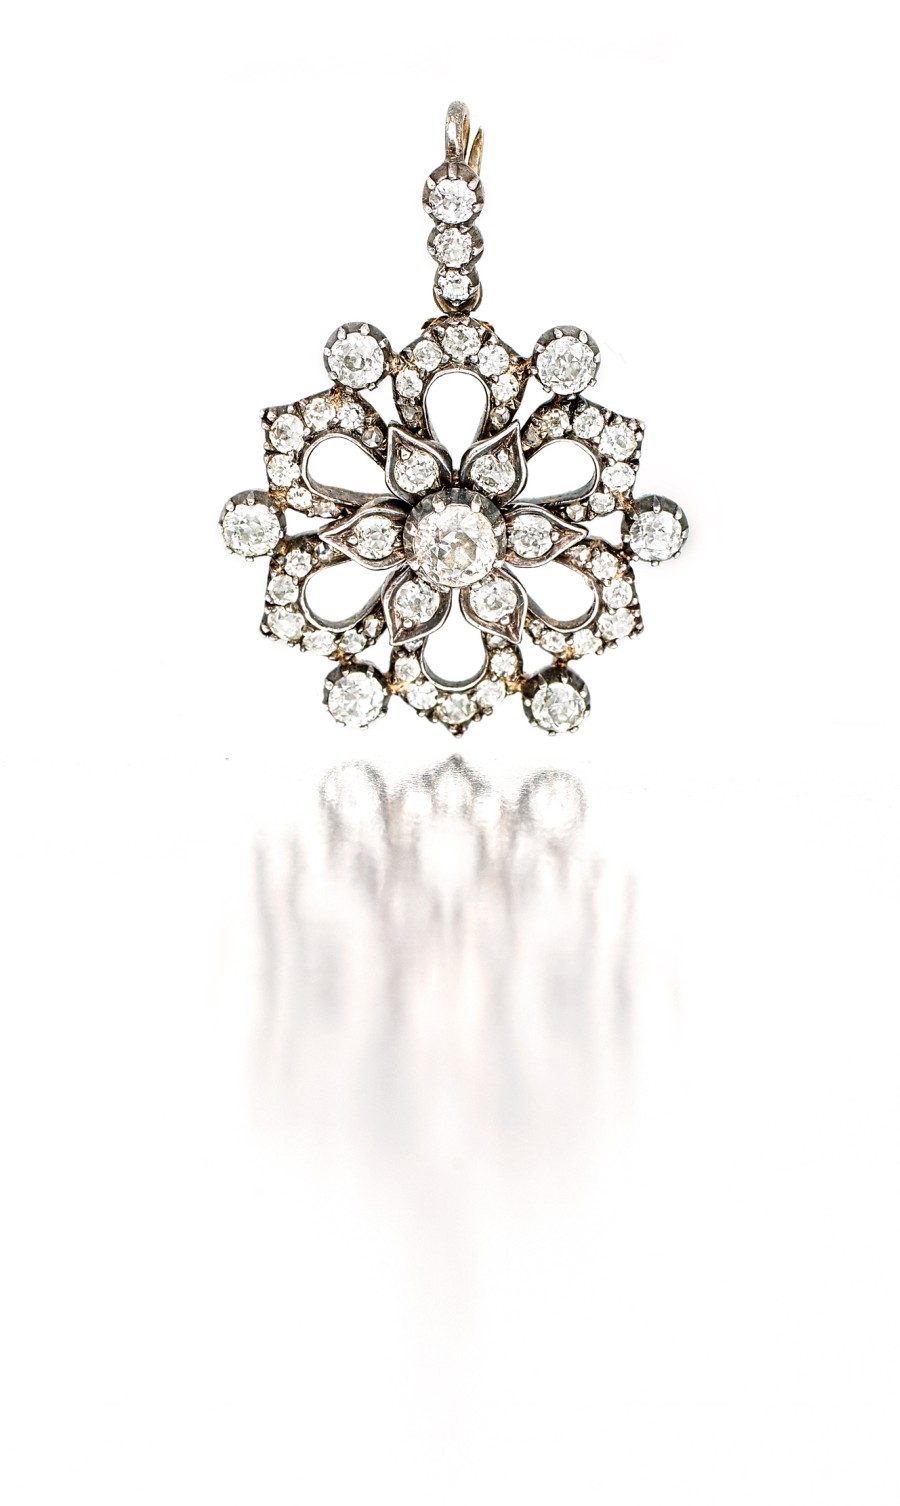 Edwardian diamond pendant/brooch, retailed by The Goldsmiths & Silversmiths Company Ltd, 112